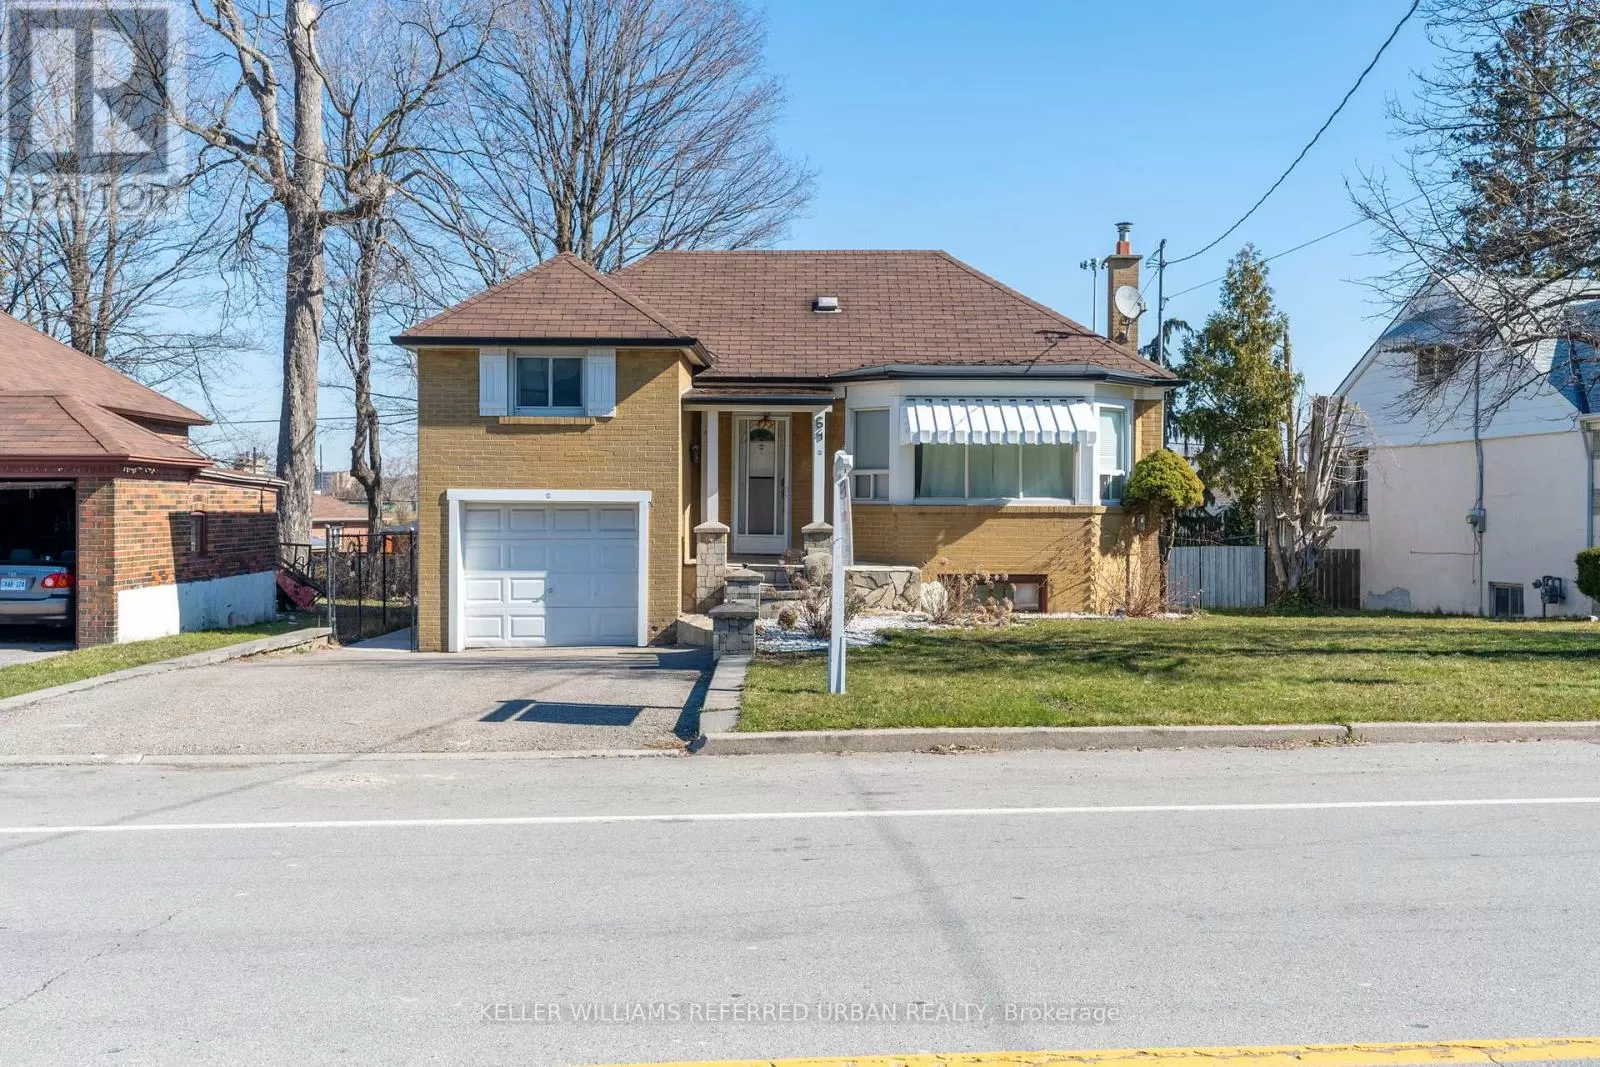 House for rent: 64 Pelmo Crescent, Toronto, Ontario M9N 2X5